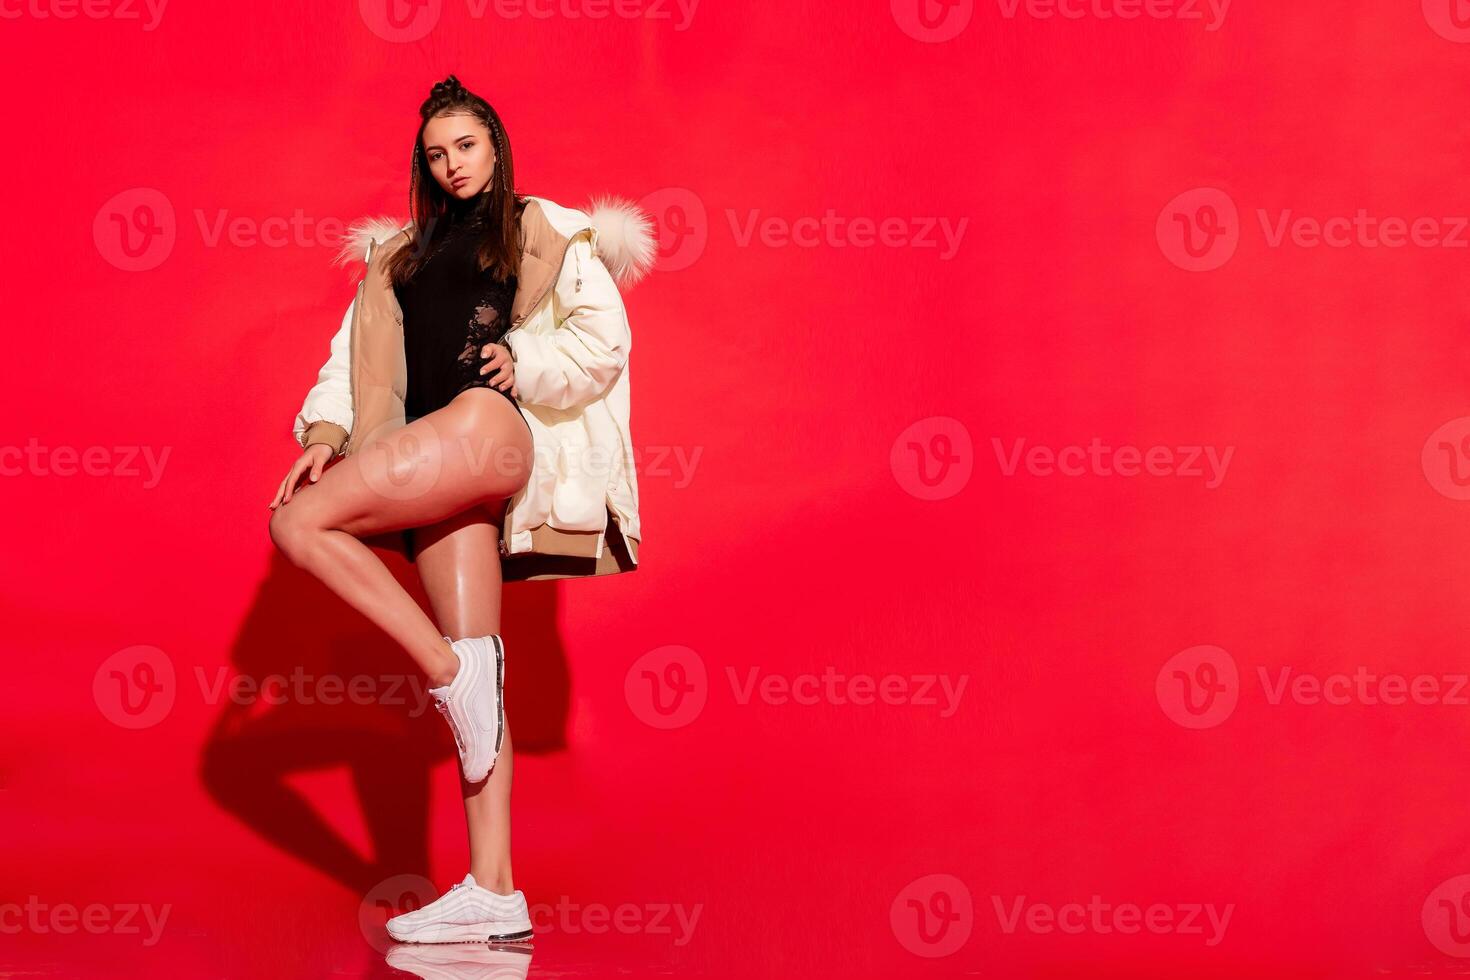 girl white jacket poses red background photo